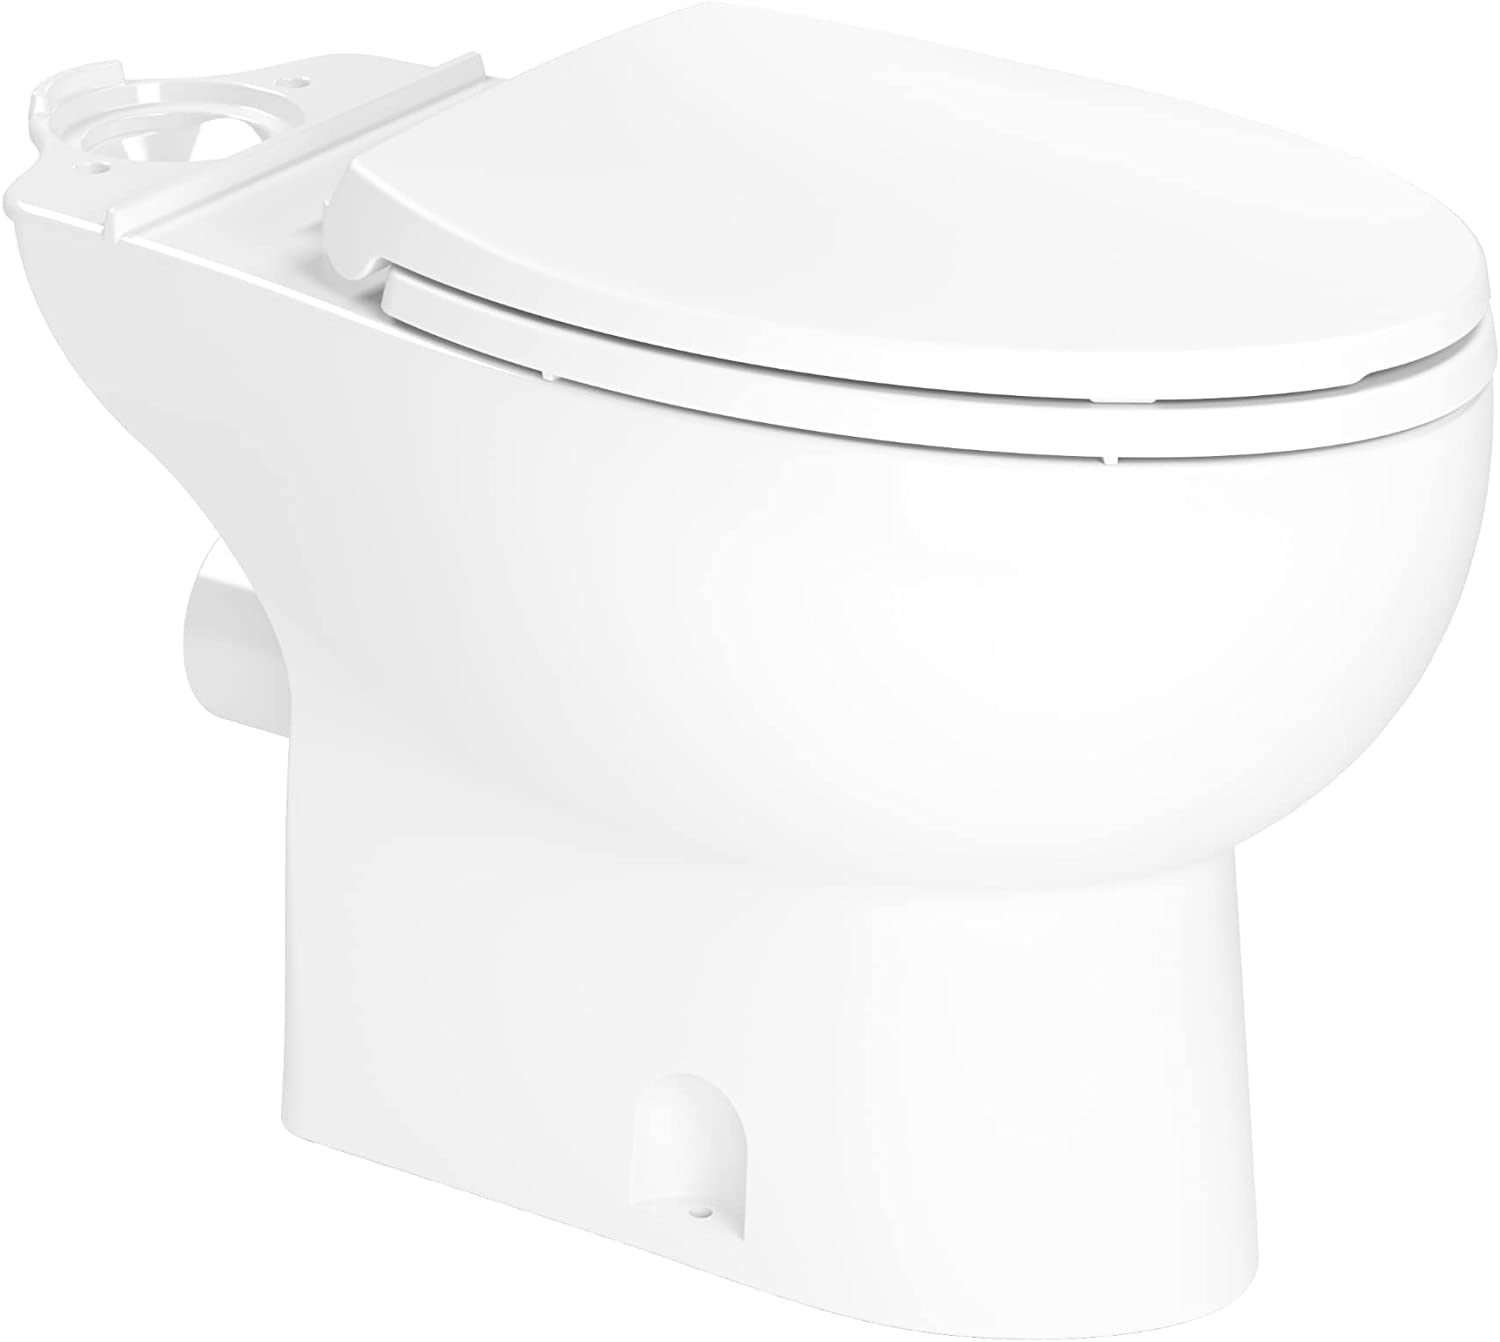 SANIFLO Elongated Toilet Bowl